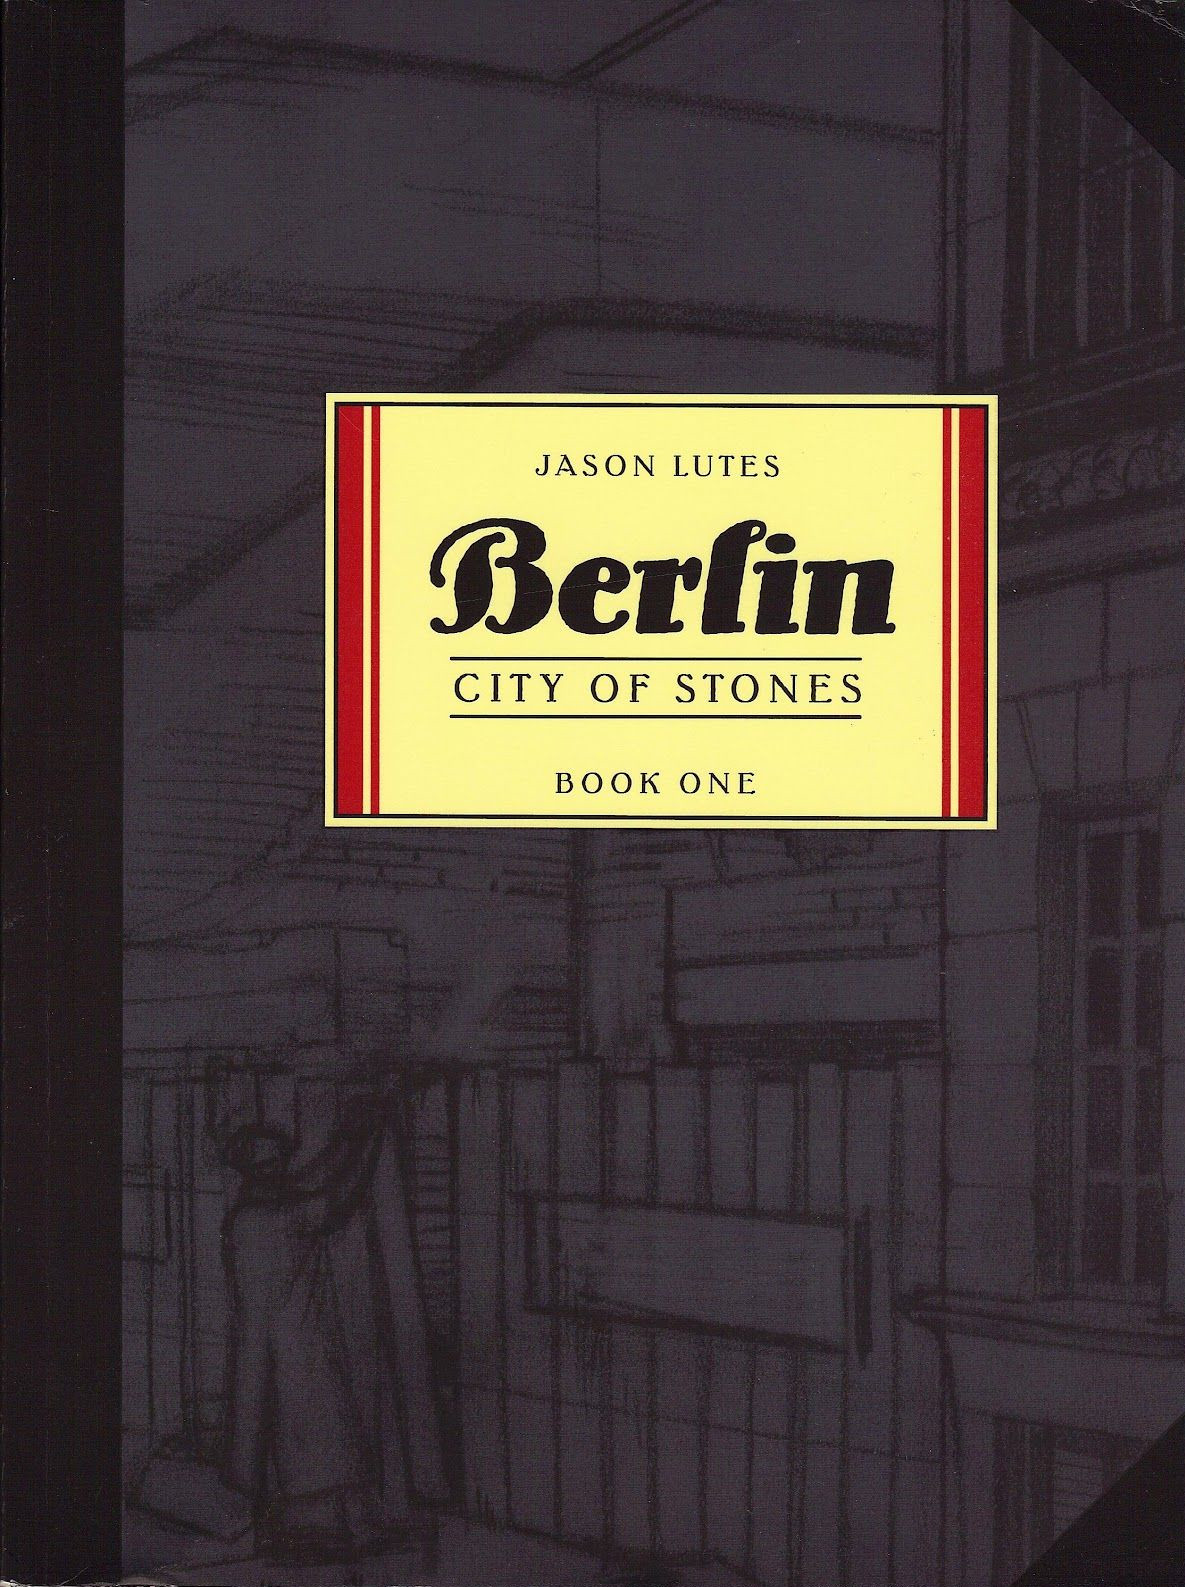 Jason Lutes: Berlin (2001, Drawn & Quarterly)